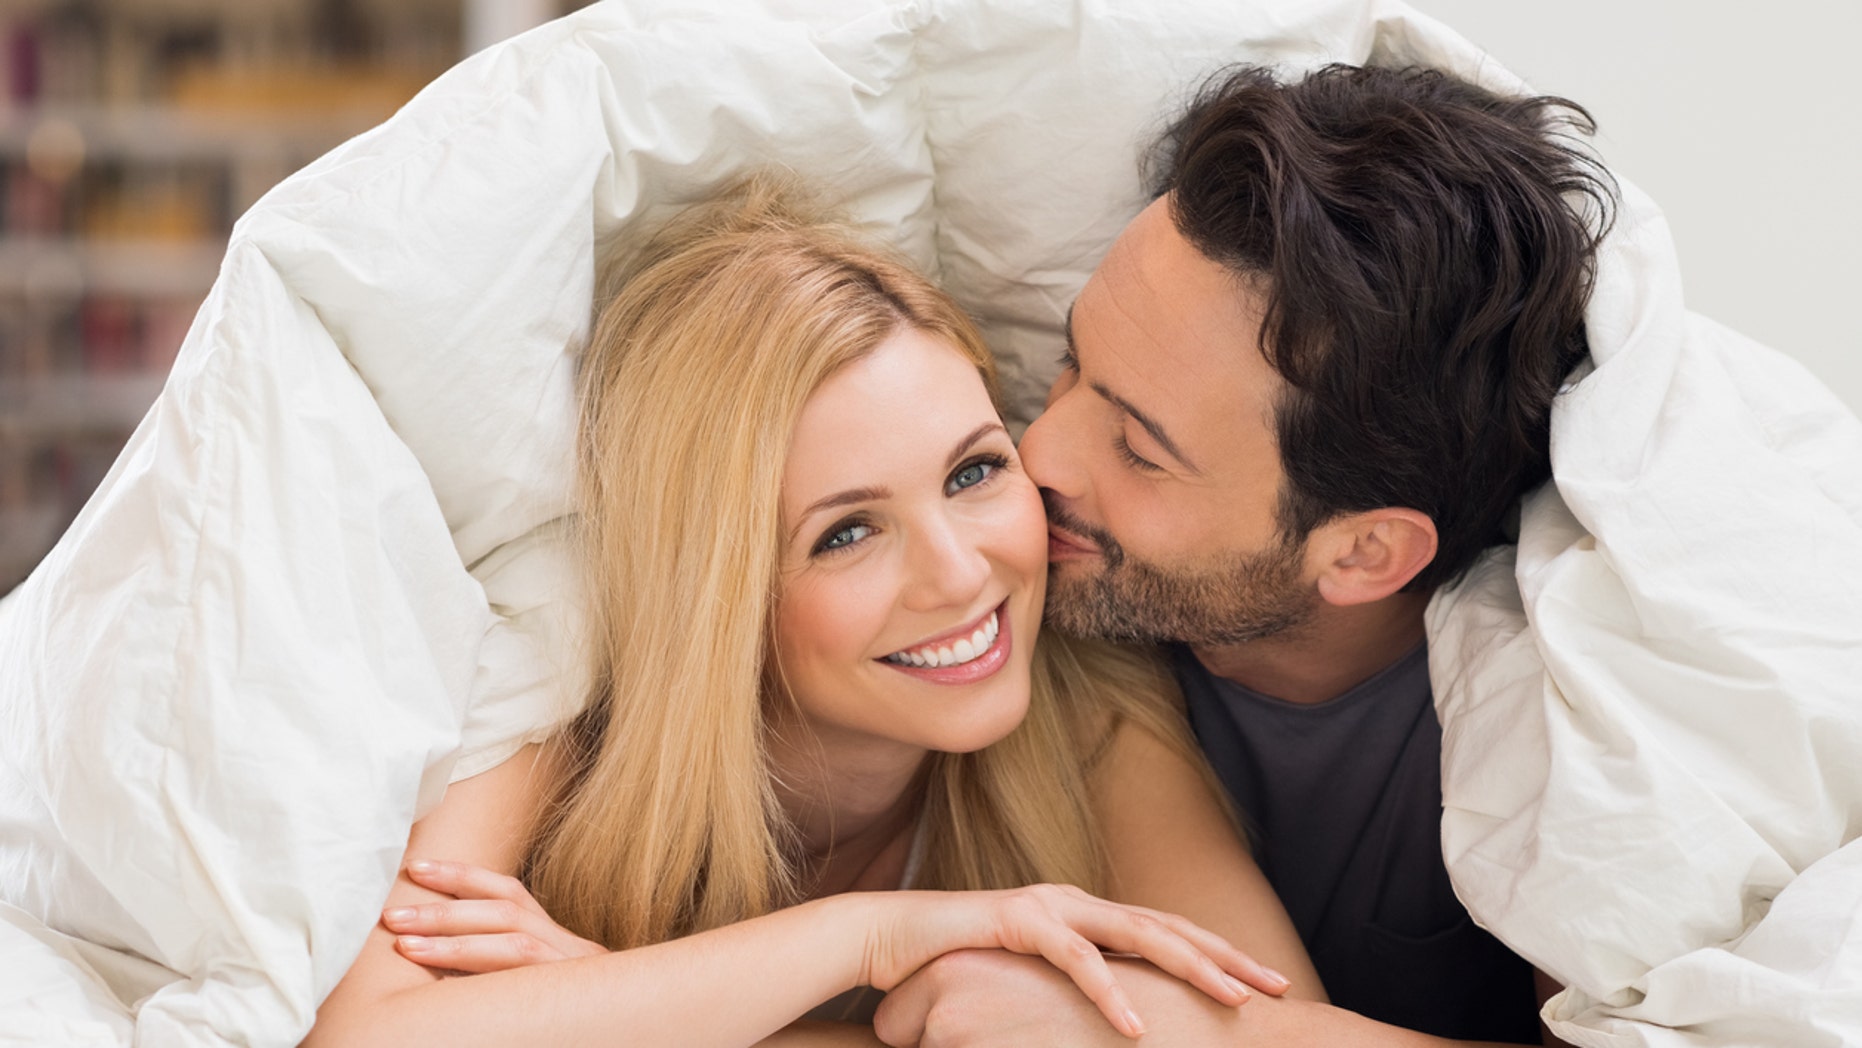 Bed 5 - 5 ways watching porn can make you a better partner | Fox News